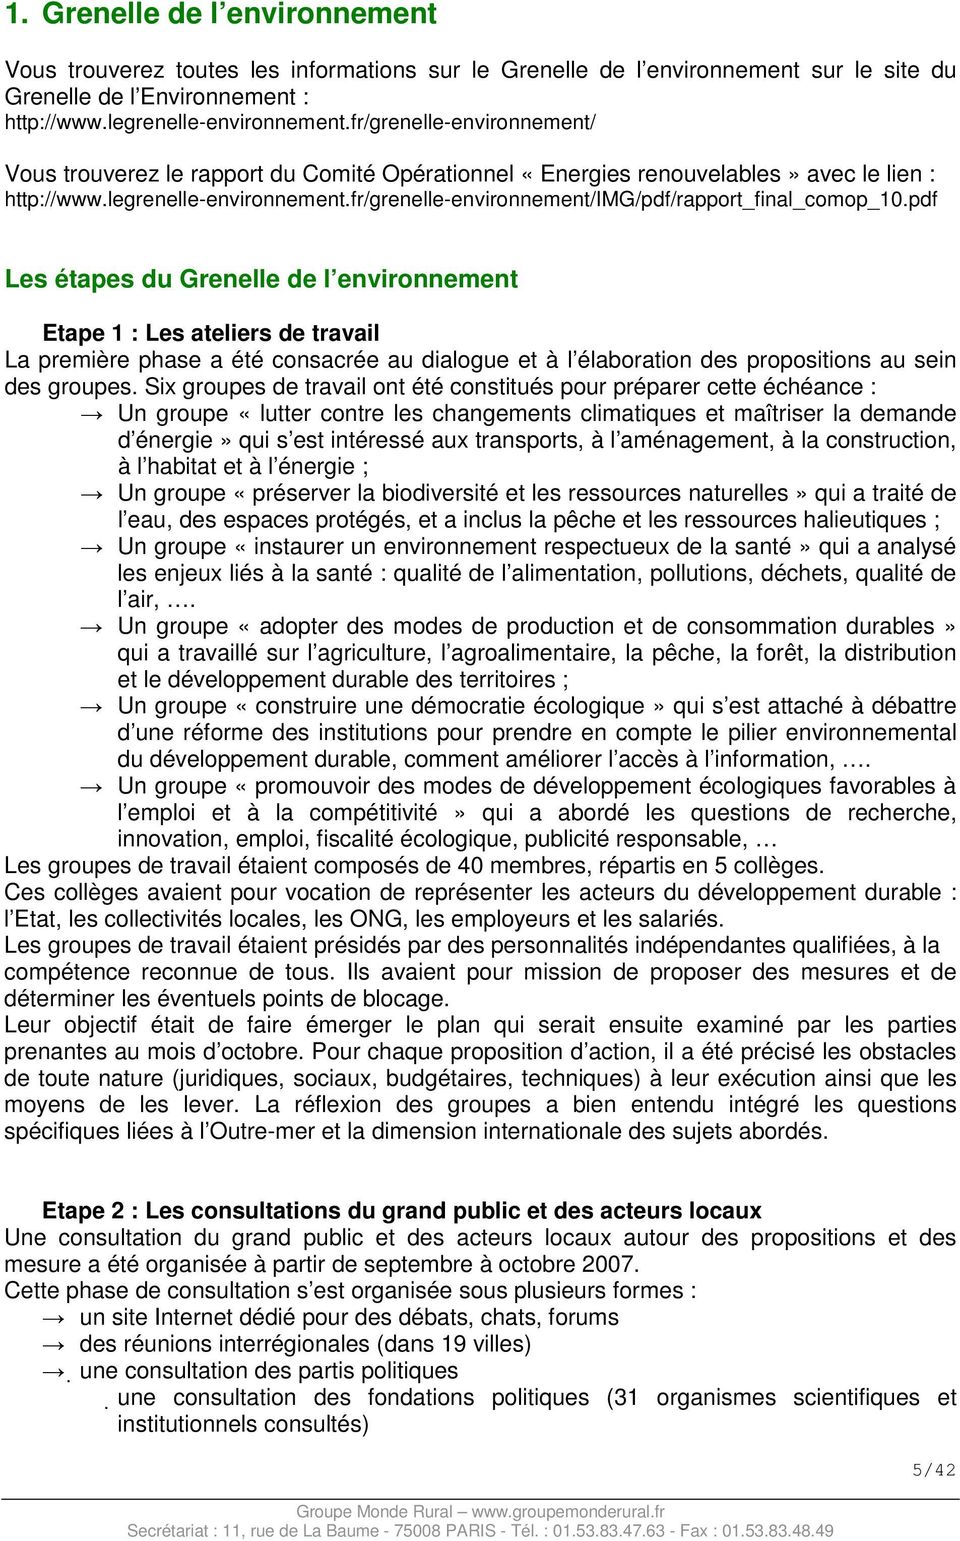 fr/grenelle-environnement/img/pdf/rapport_final_comop_10.